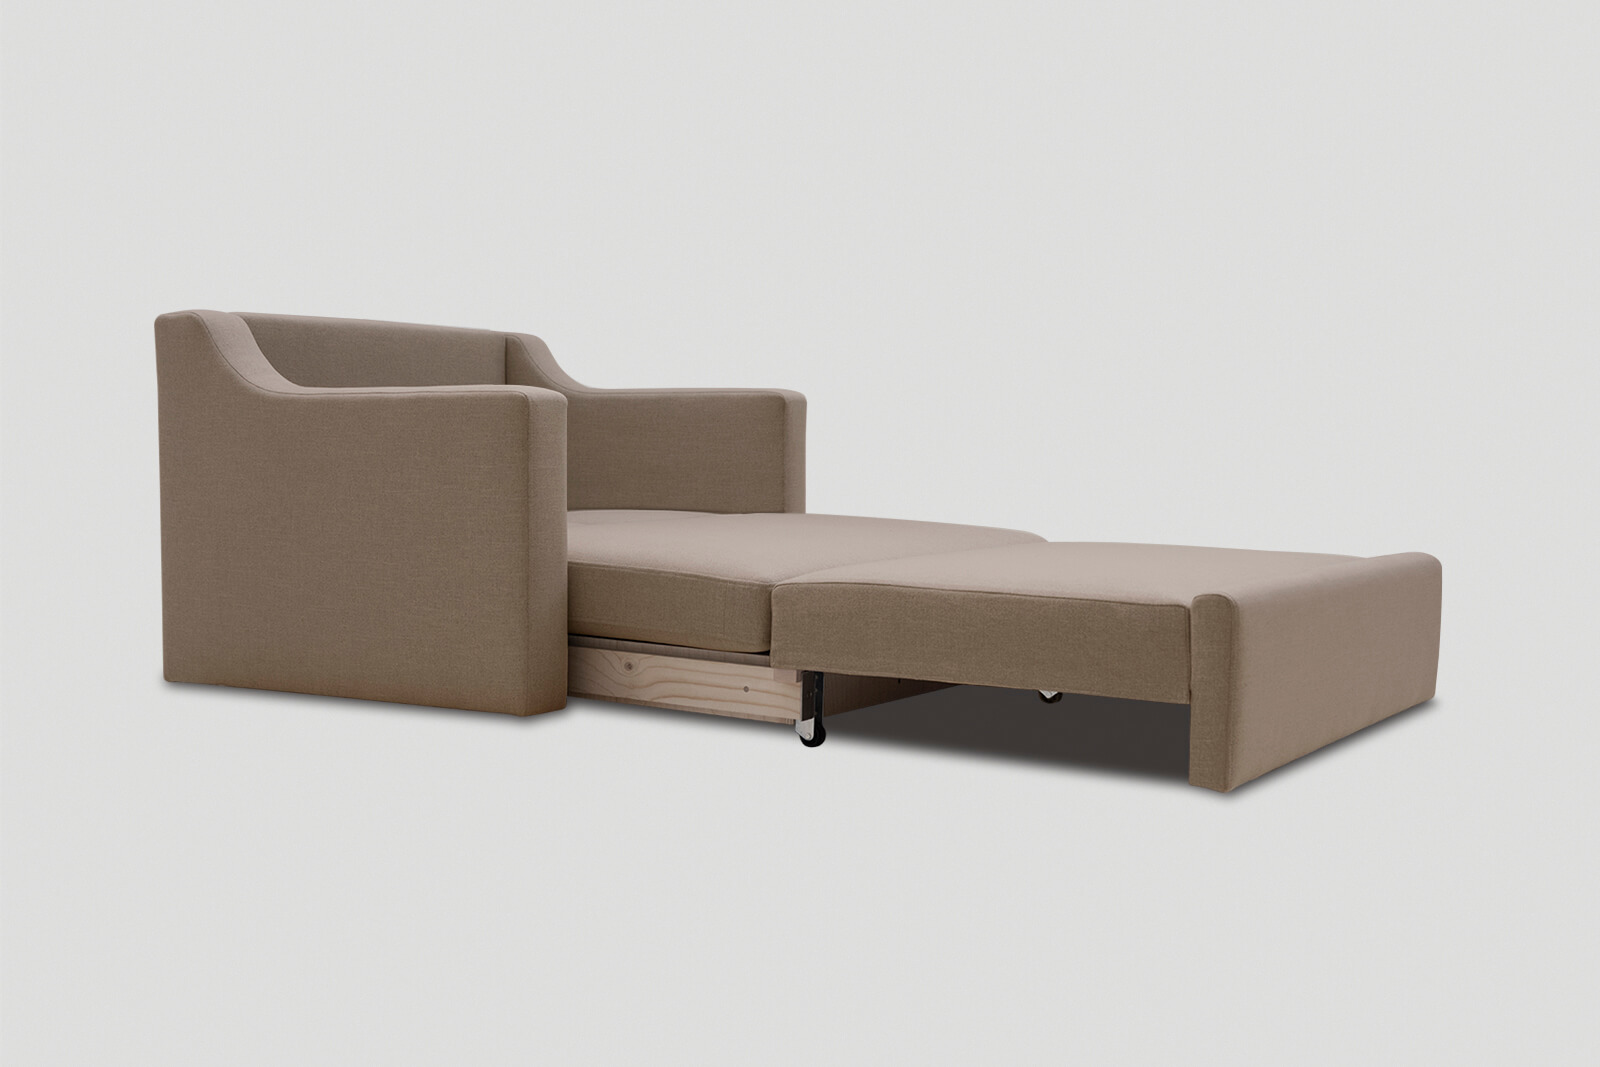 HBSB02-single-sofa-bed-husk-3q-bed